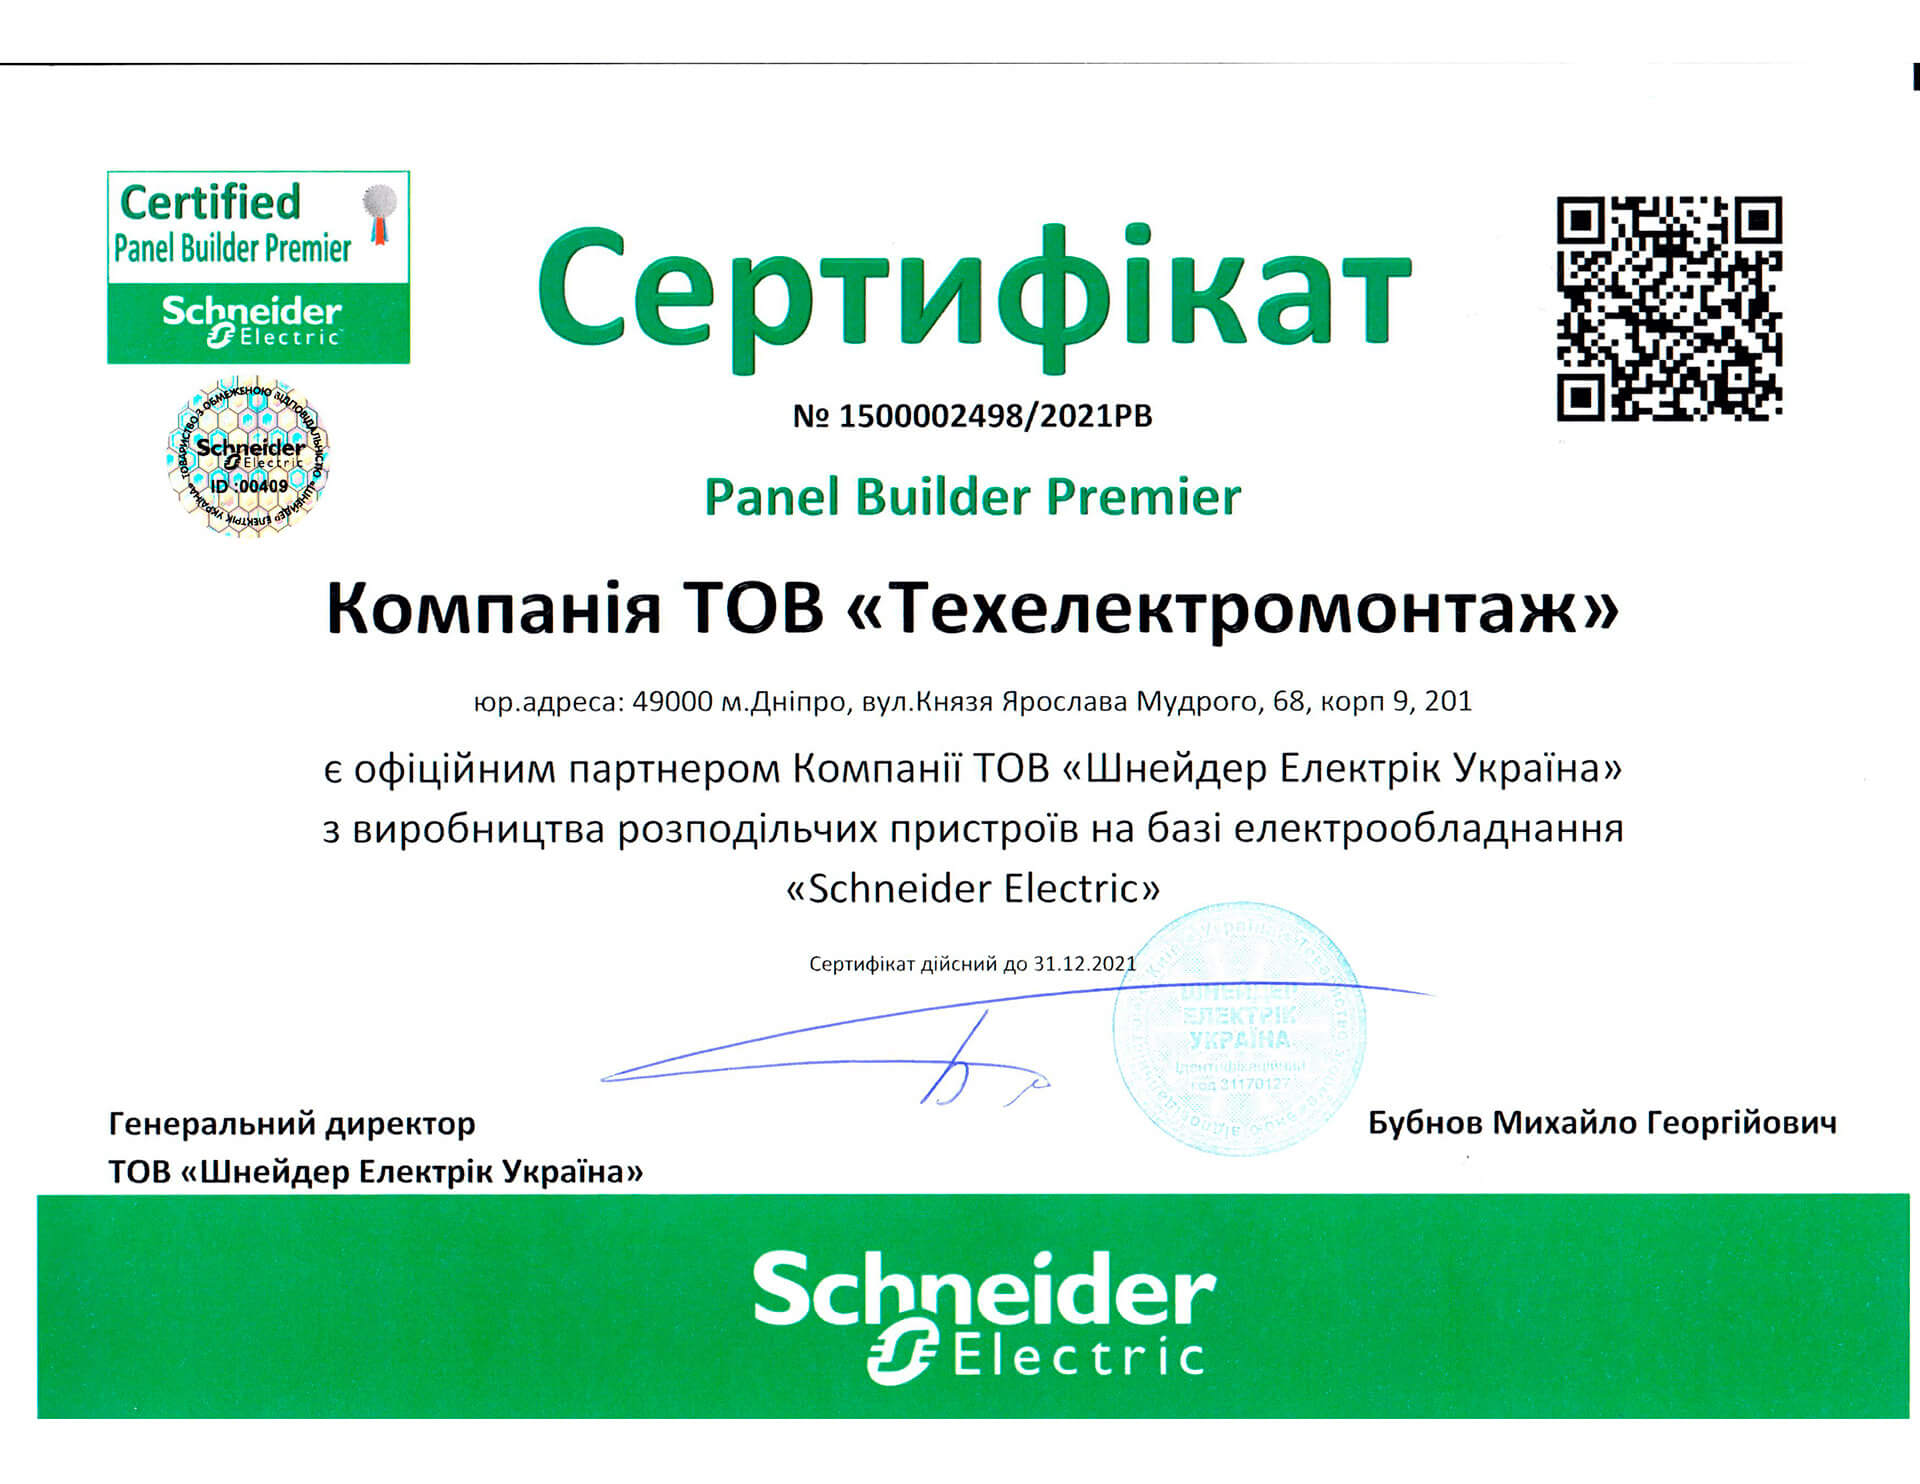 сertificat_premier_schneider electric_tem_com_ua